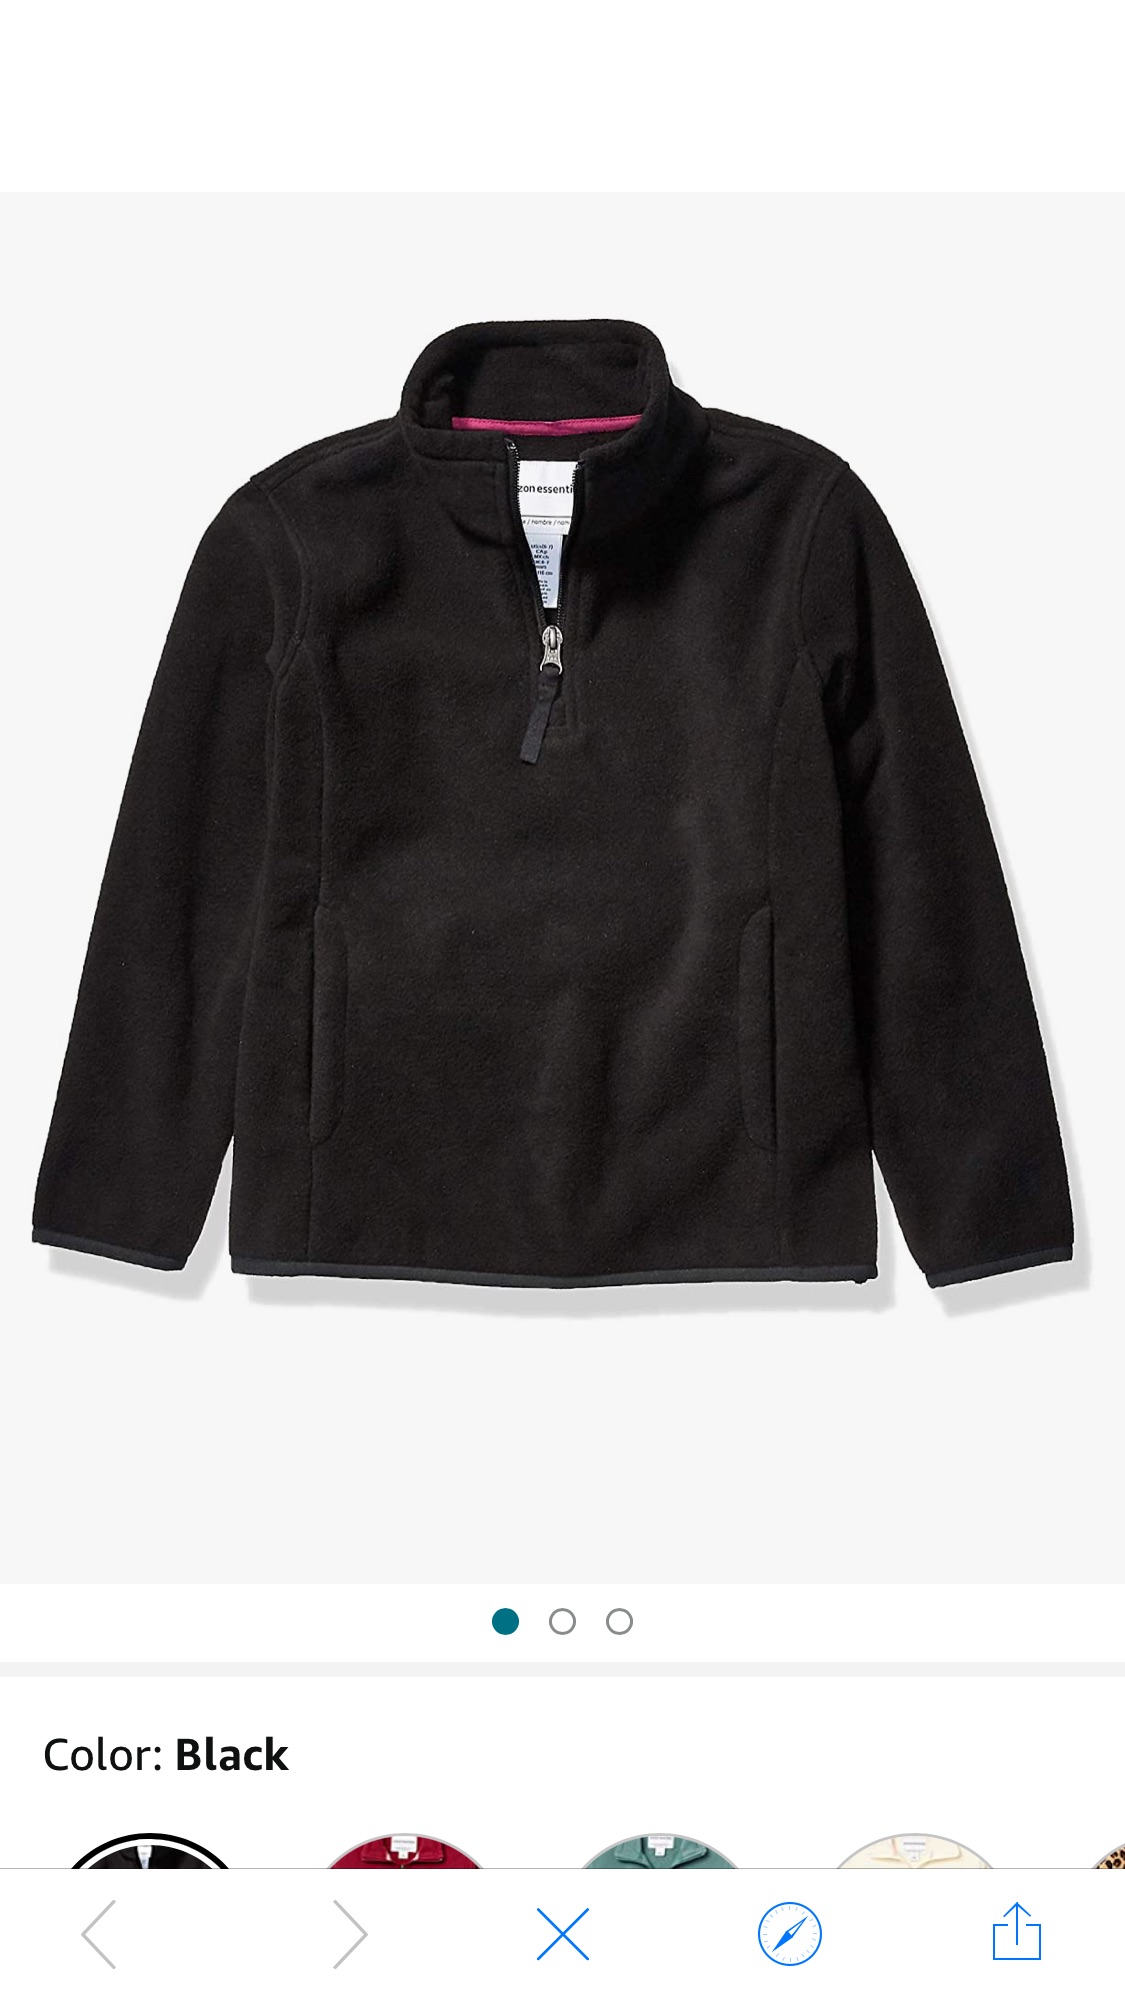 Amazon Essentials Girls' Quarter-Zip Polar Fleece Jacket, Black, Medium 小孩外套